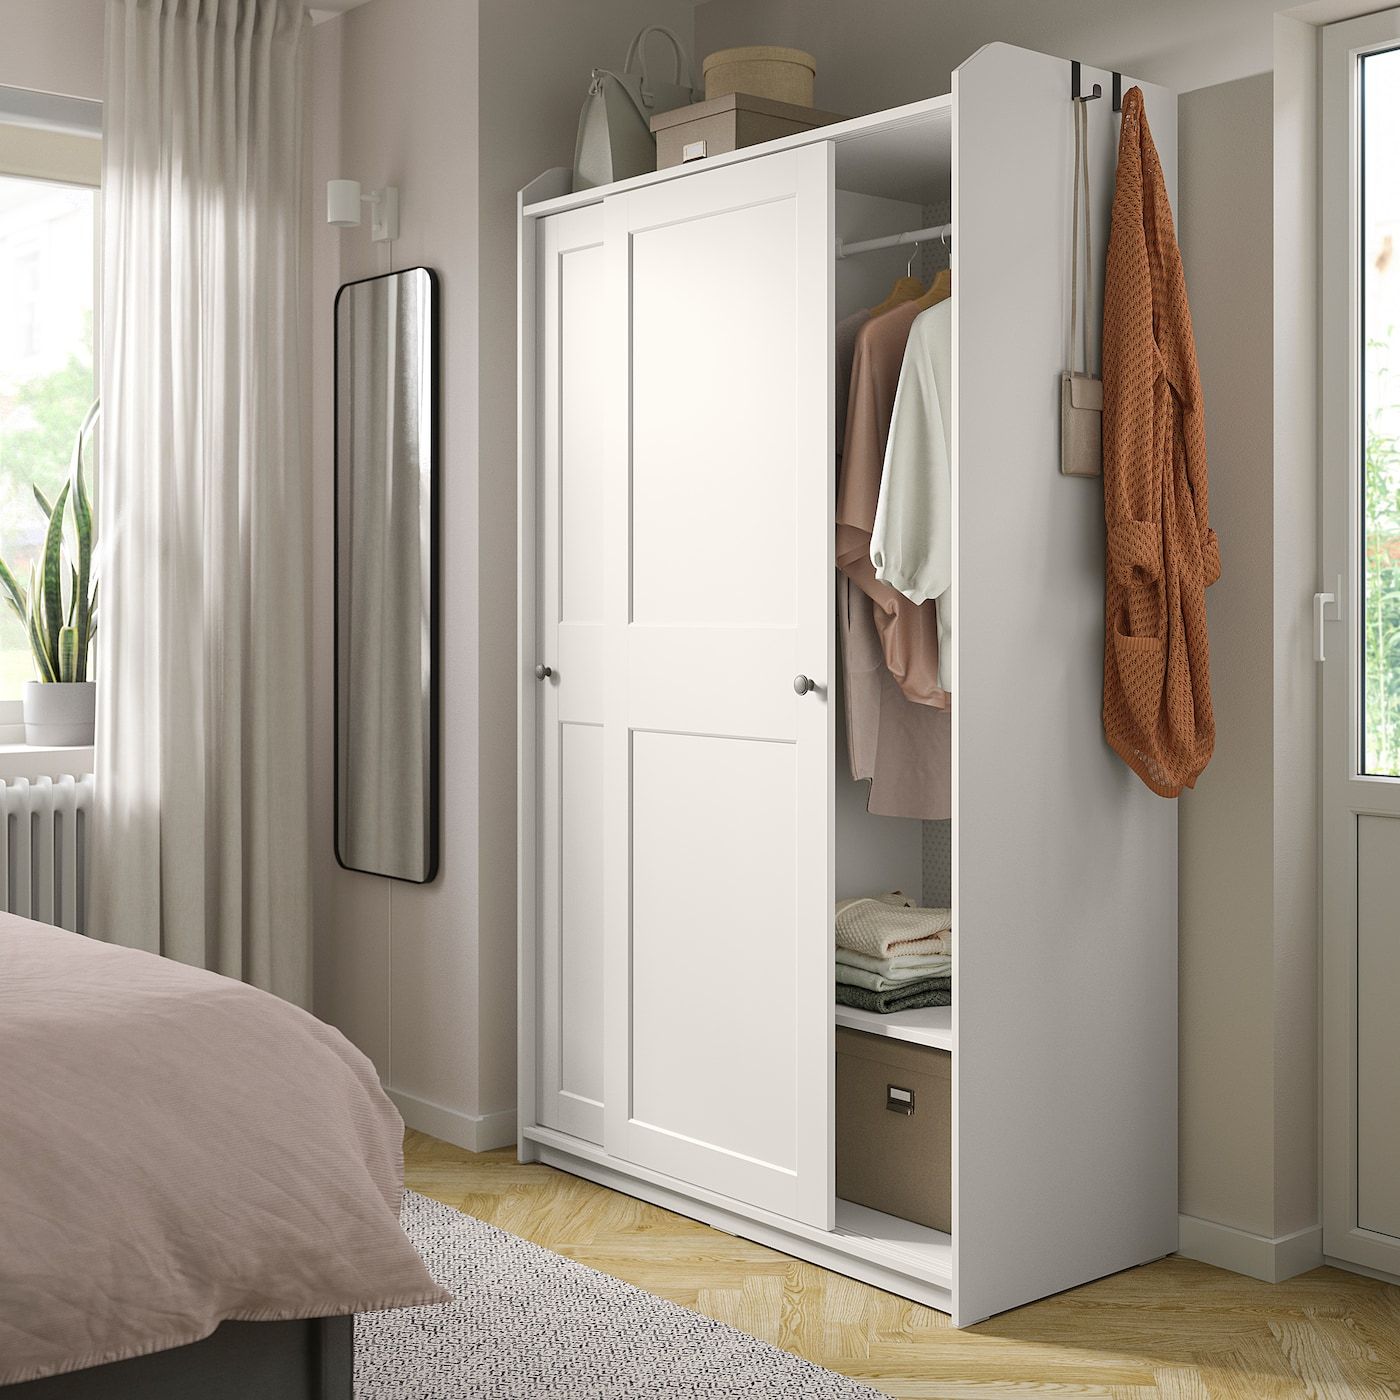 Hauga Wardrobe With Sliding Doors, White, 118x55x199 Cm – Ikea With Sliding Door Wardrobes (Photo 15 of 15)